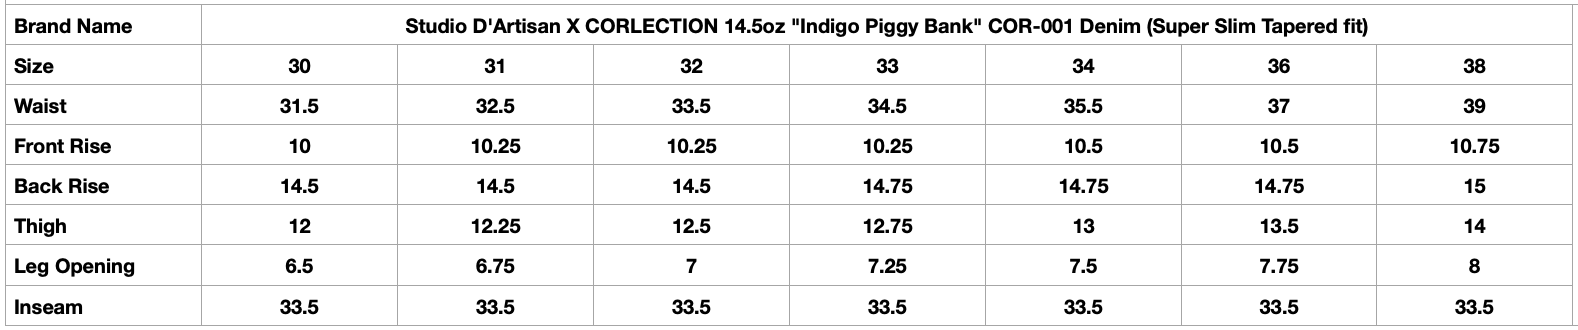 Studio D'Artisan X CORLECTION 14.5oz "Indigo Piggy Bank" COR-001 Denim (Super Slim Tapered Fit)